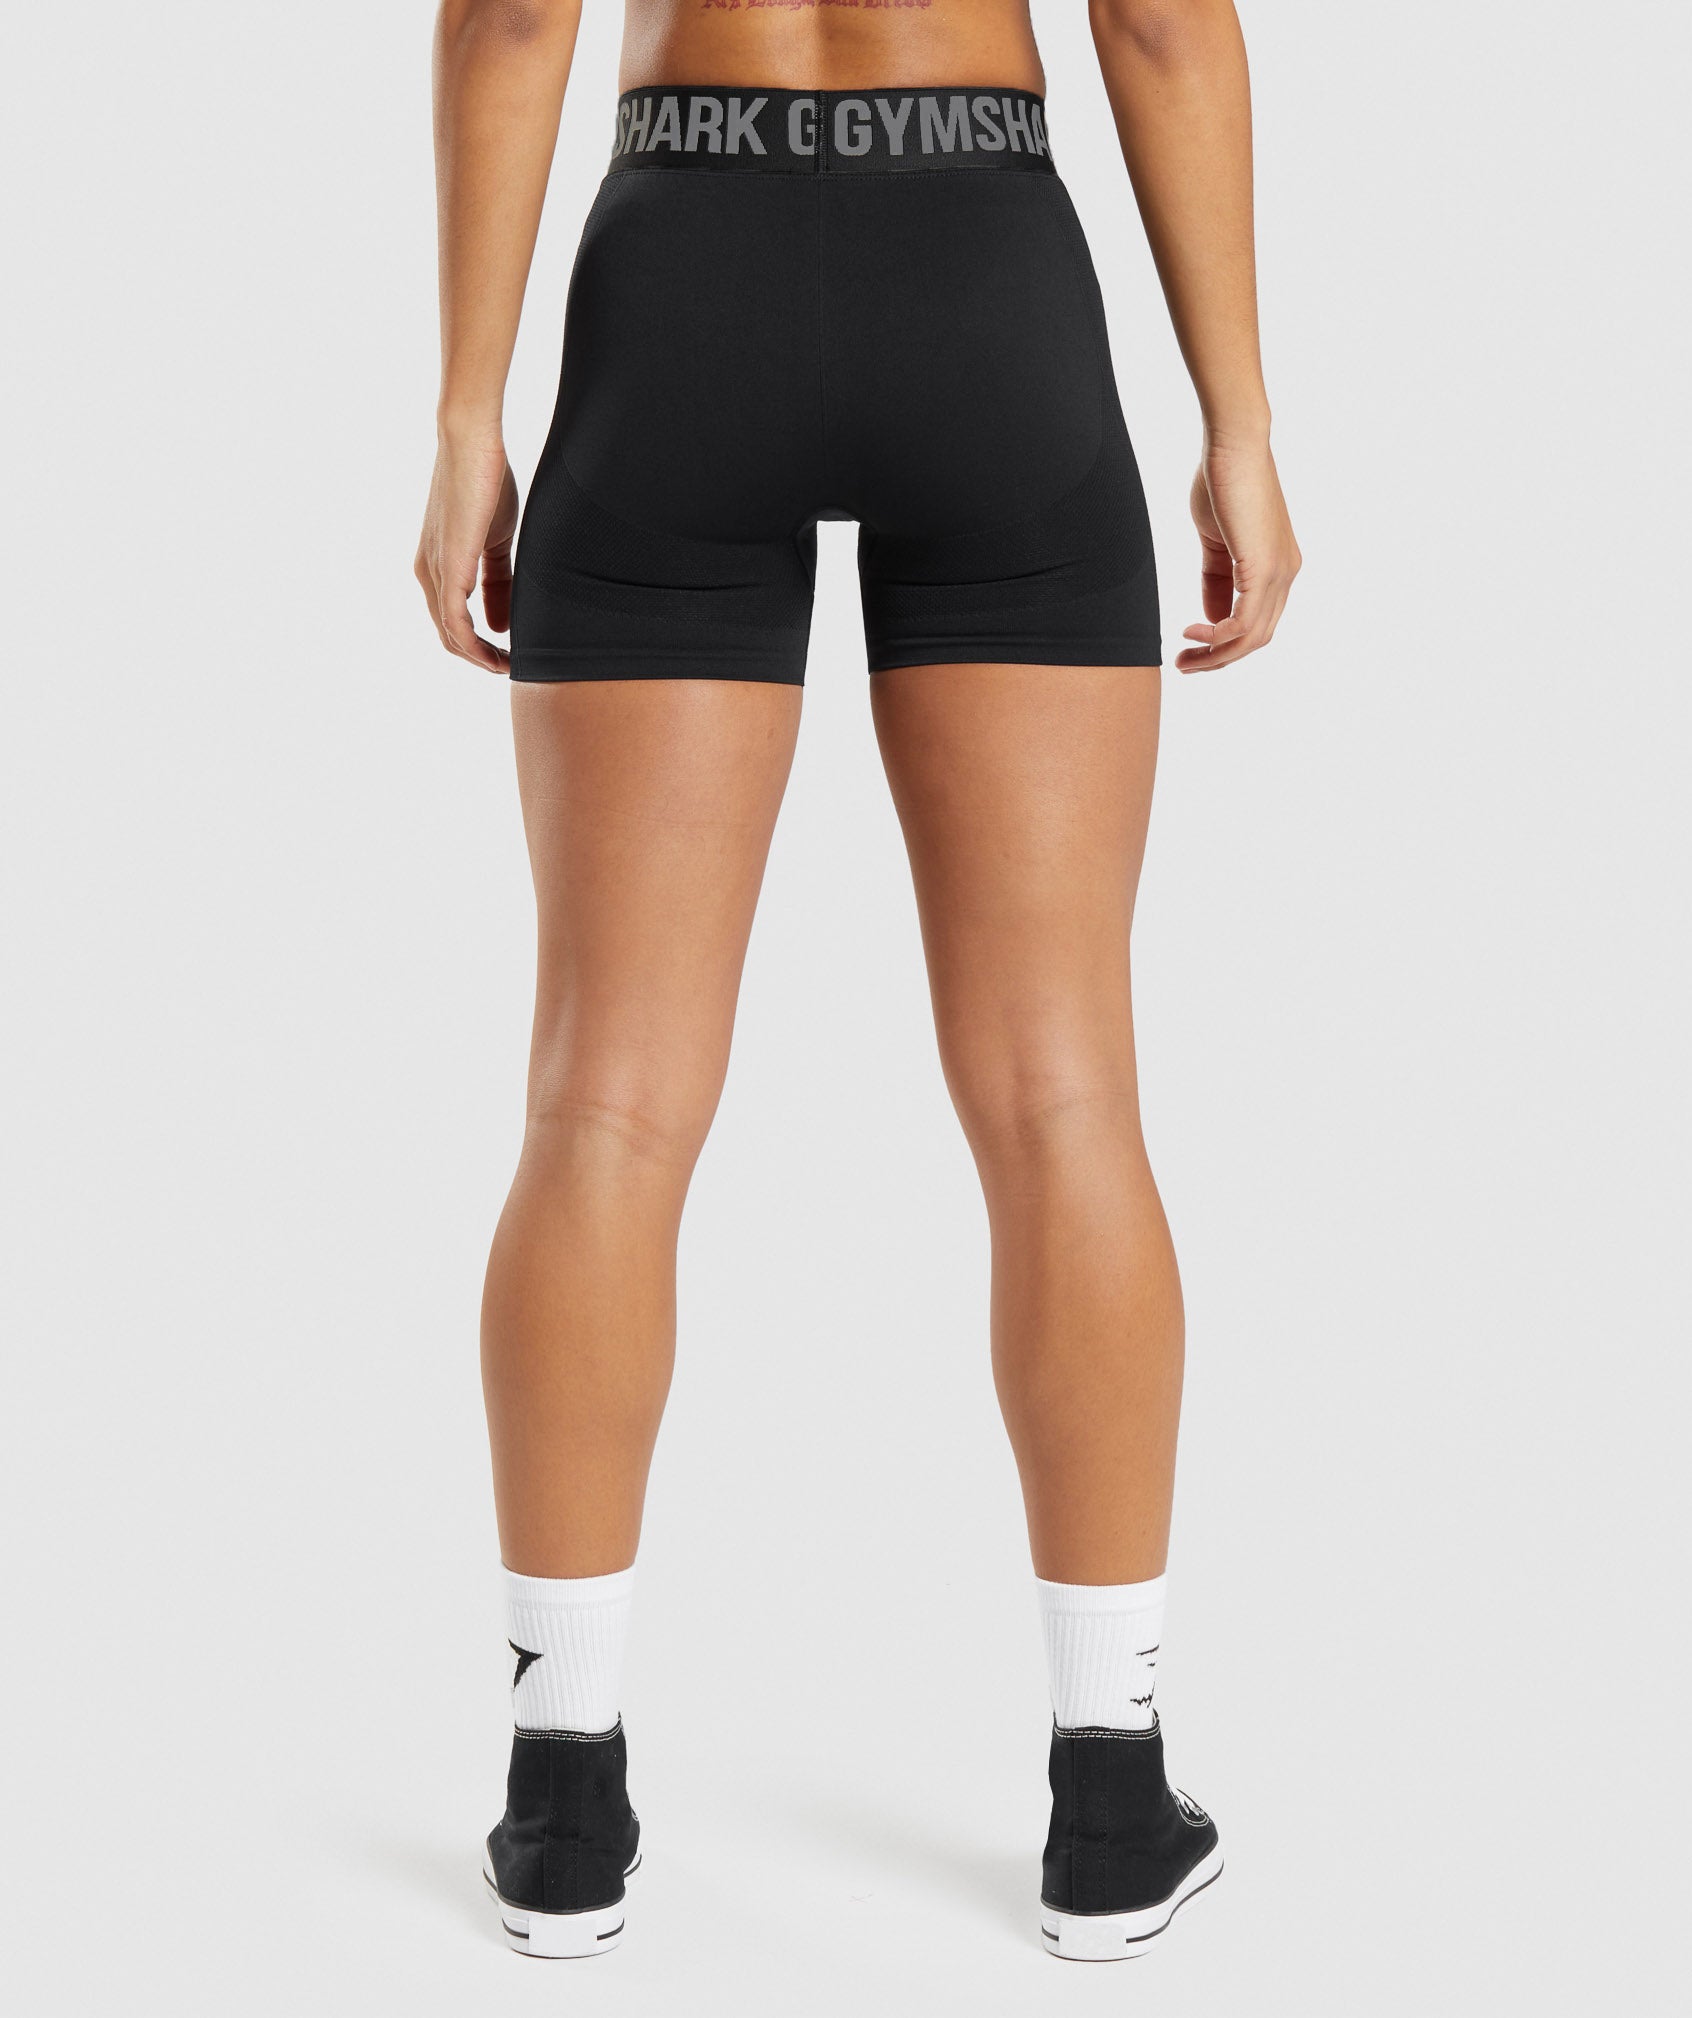 Gymshark Flex Shorts Green - $30 (14% Off Retail) - From Grace